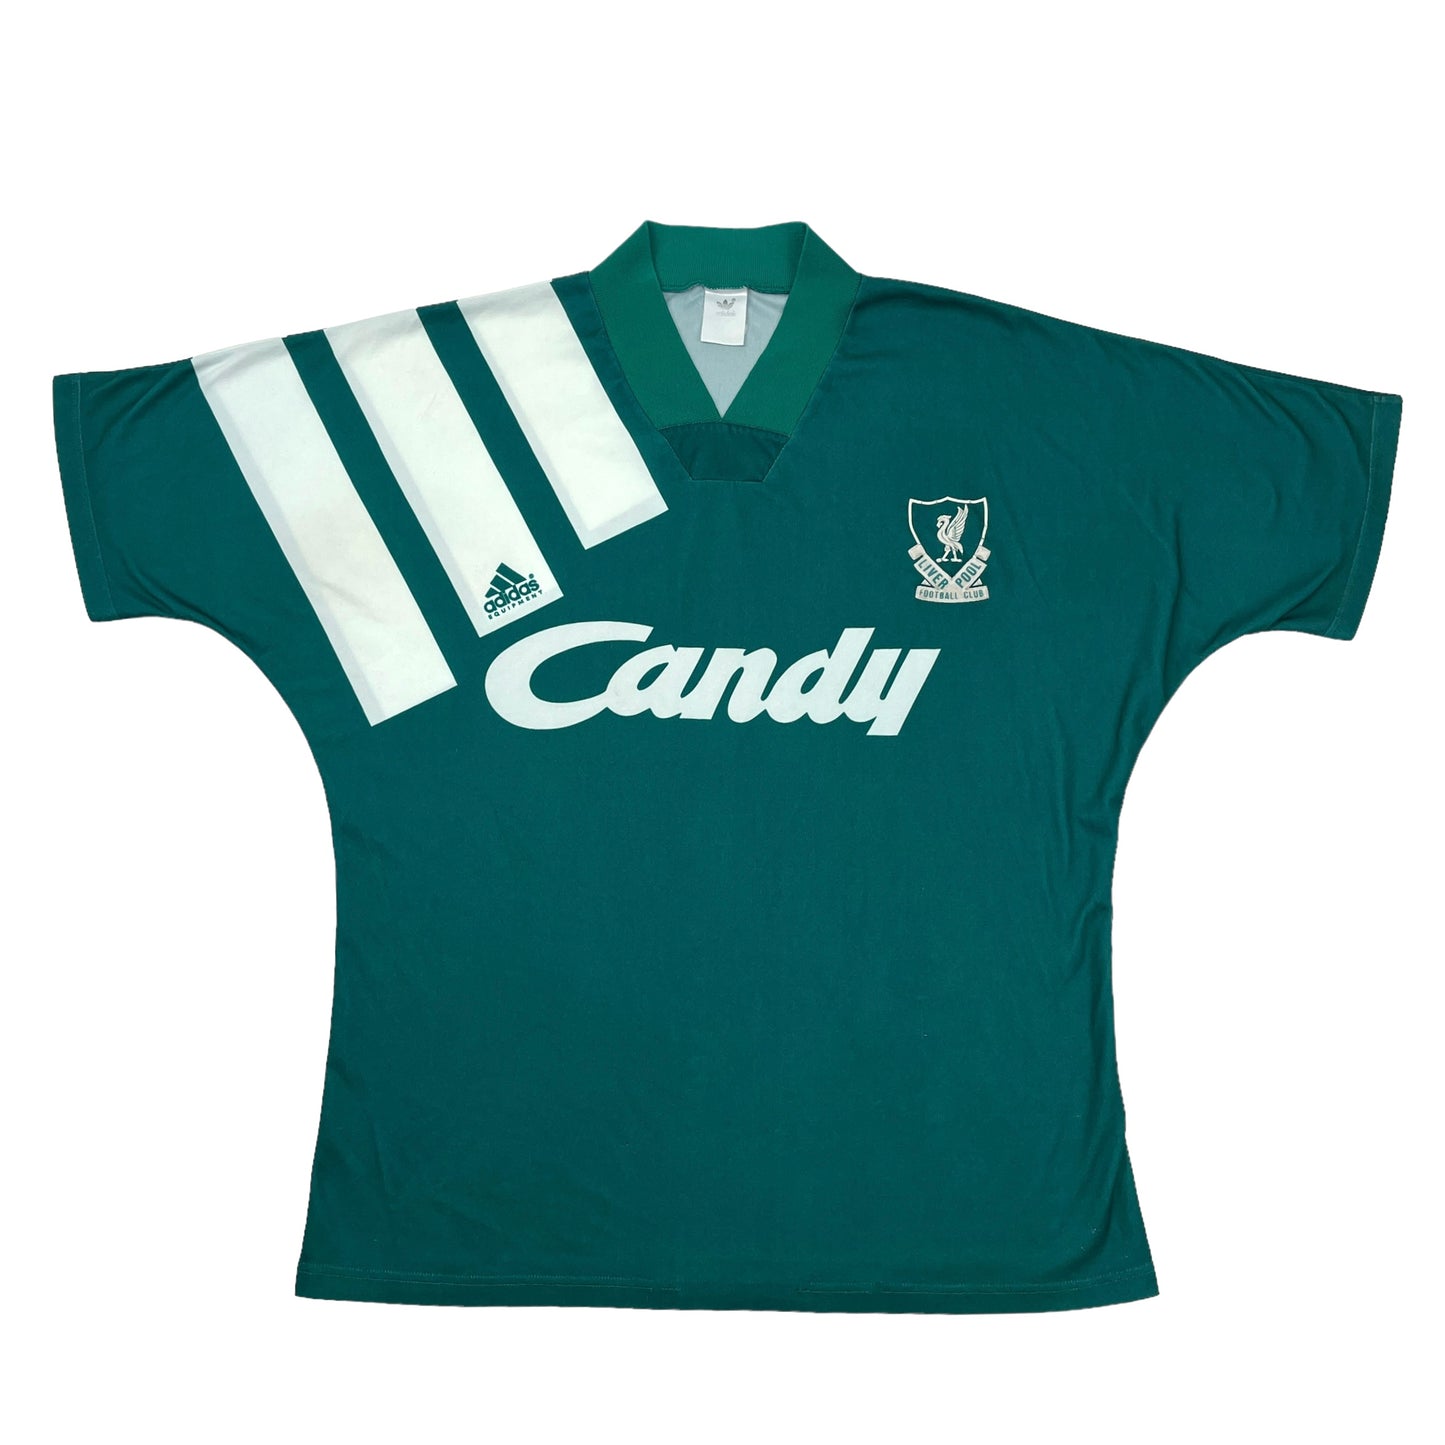 01217 Adidas Equipment Liverpool FC 91/92 Away Jersey